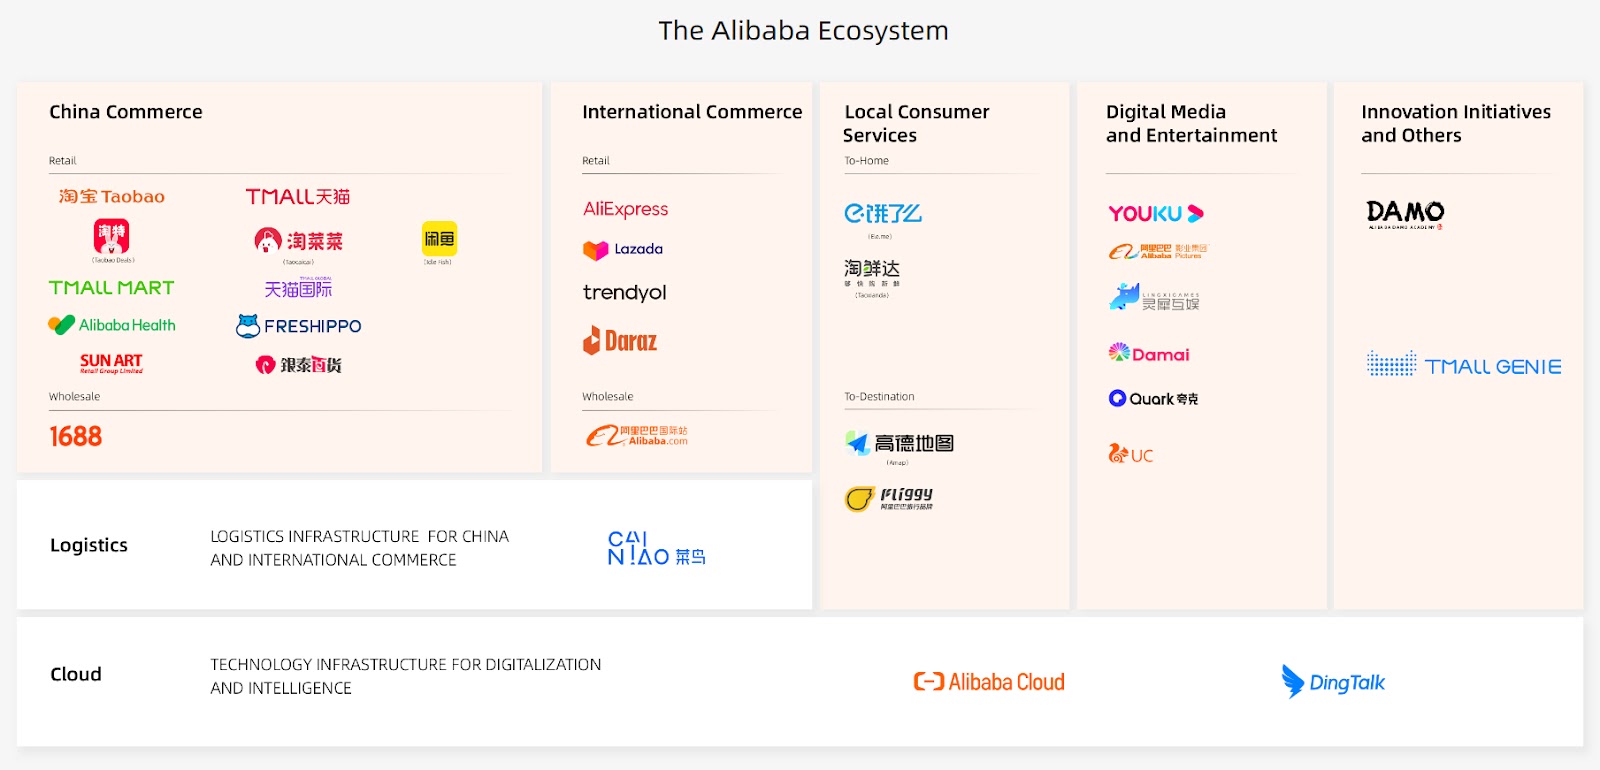 The Alibaba ecosystem